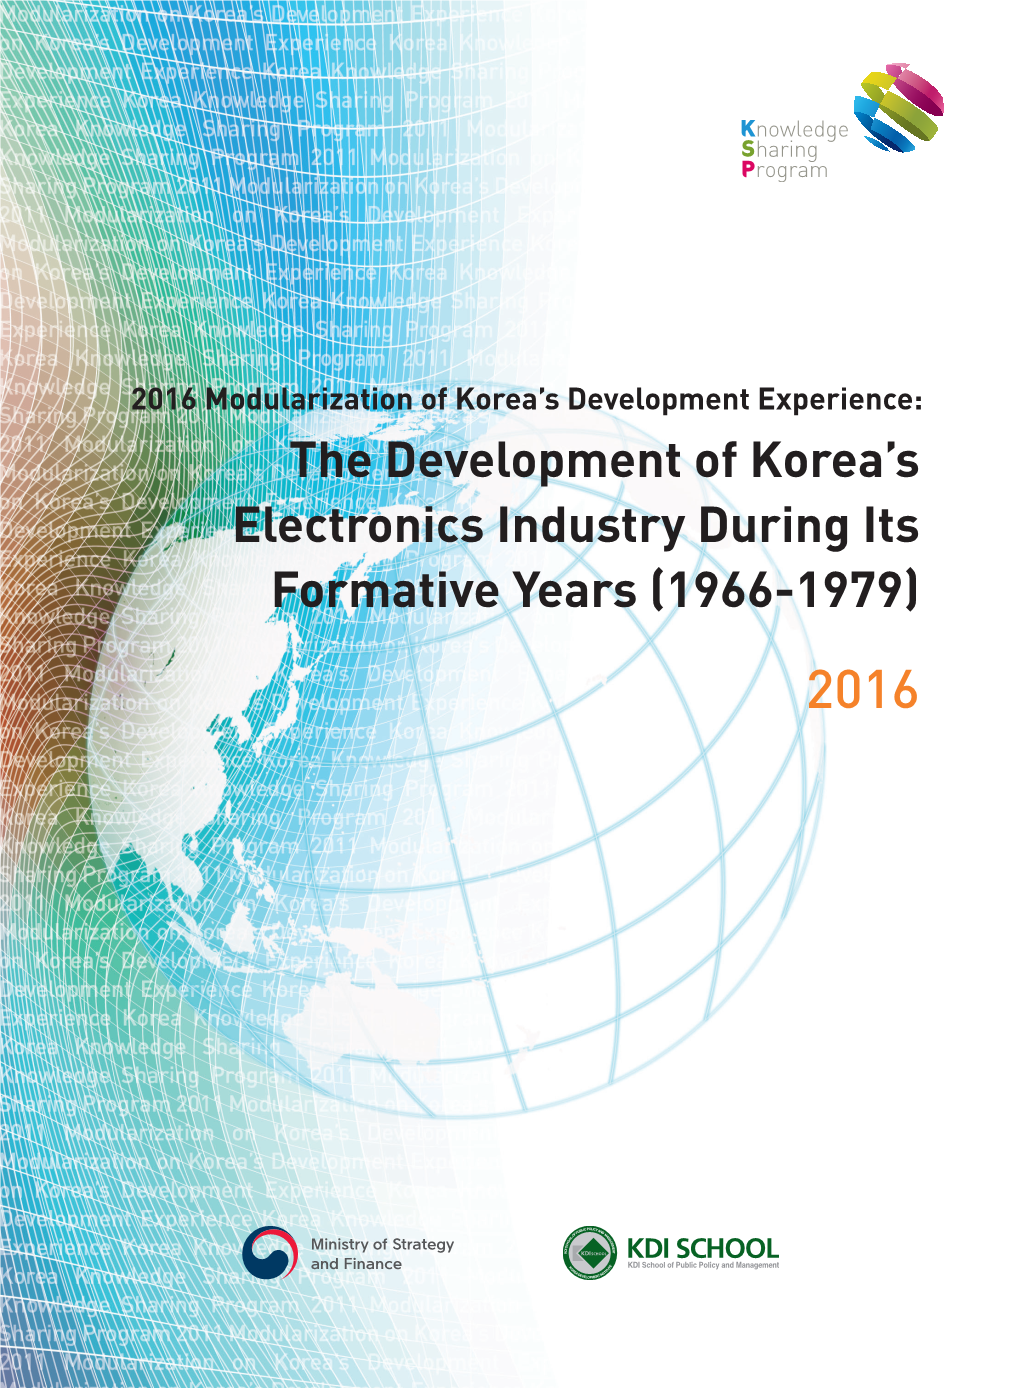 The Development of Korea's Electronics